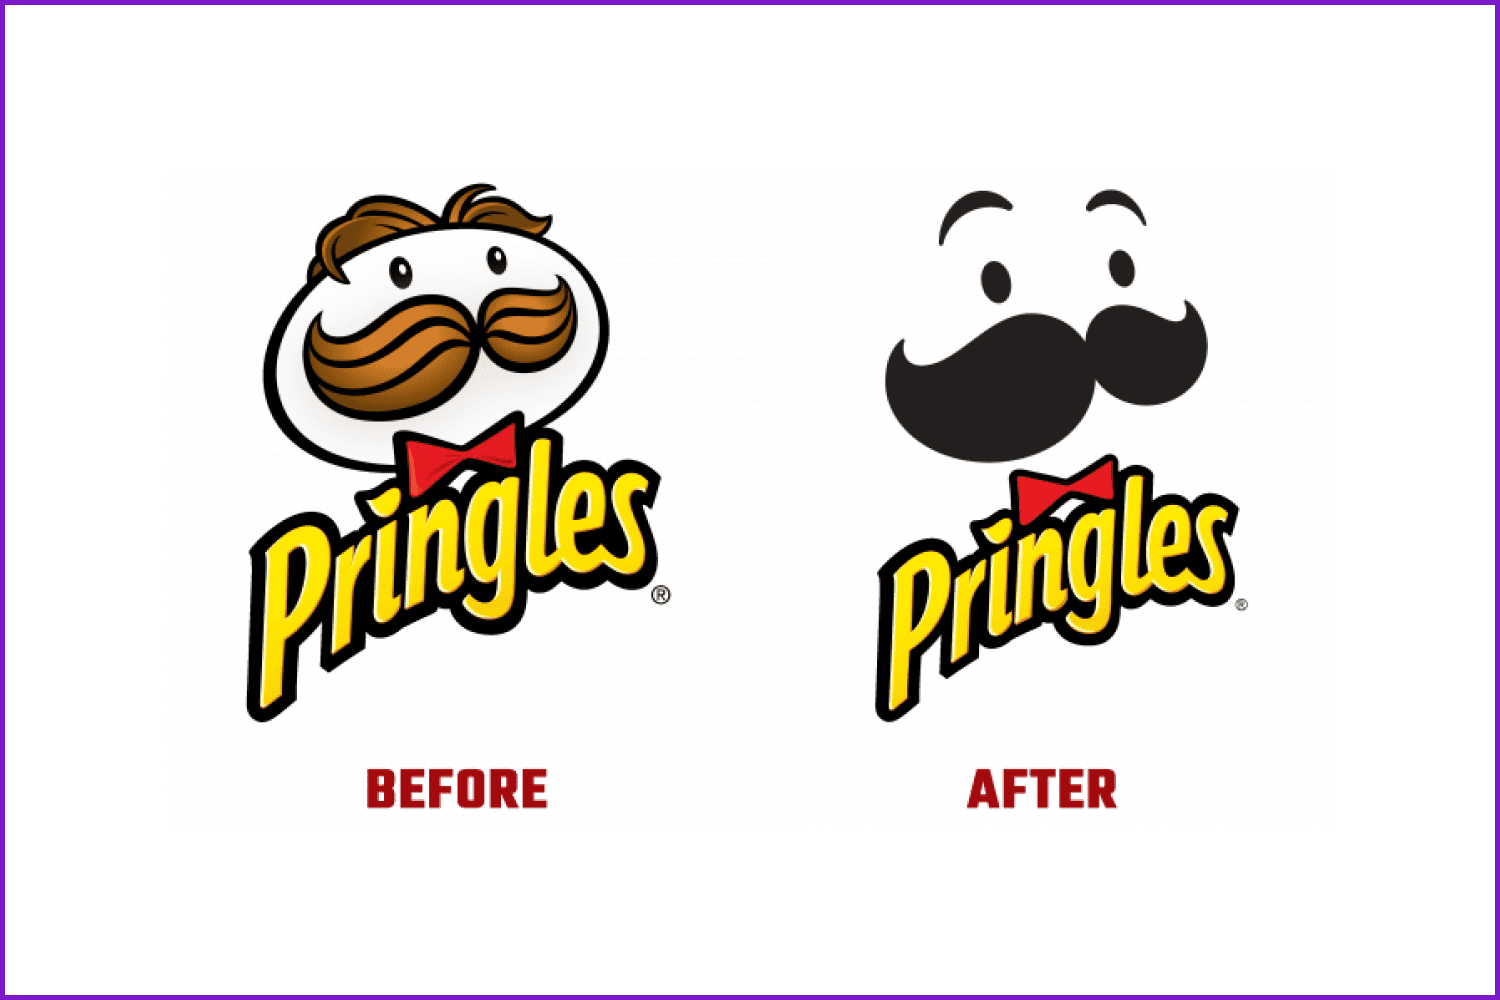 Pringles logotype variants.